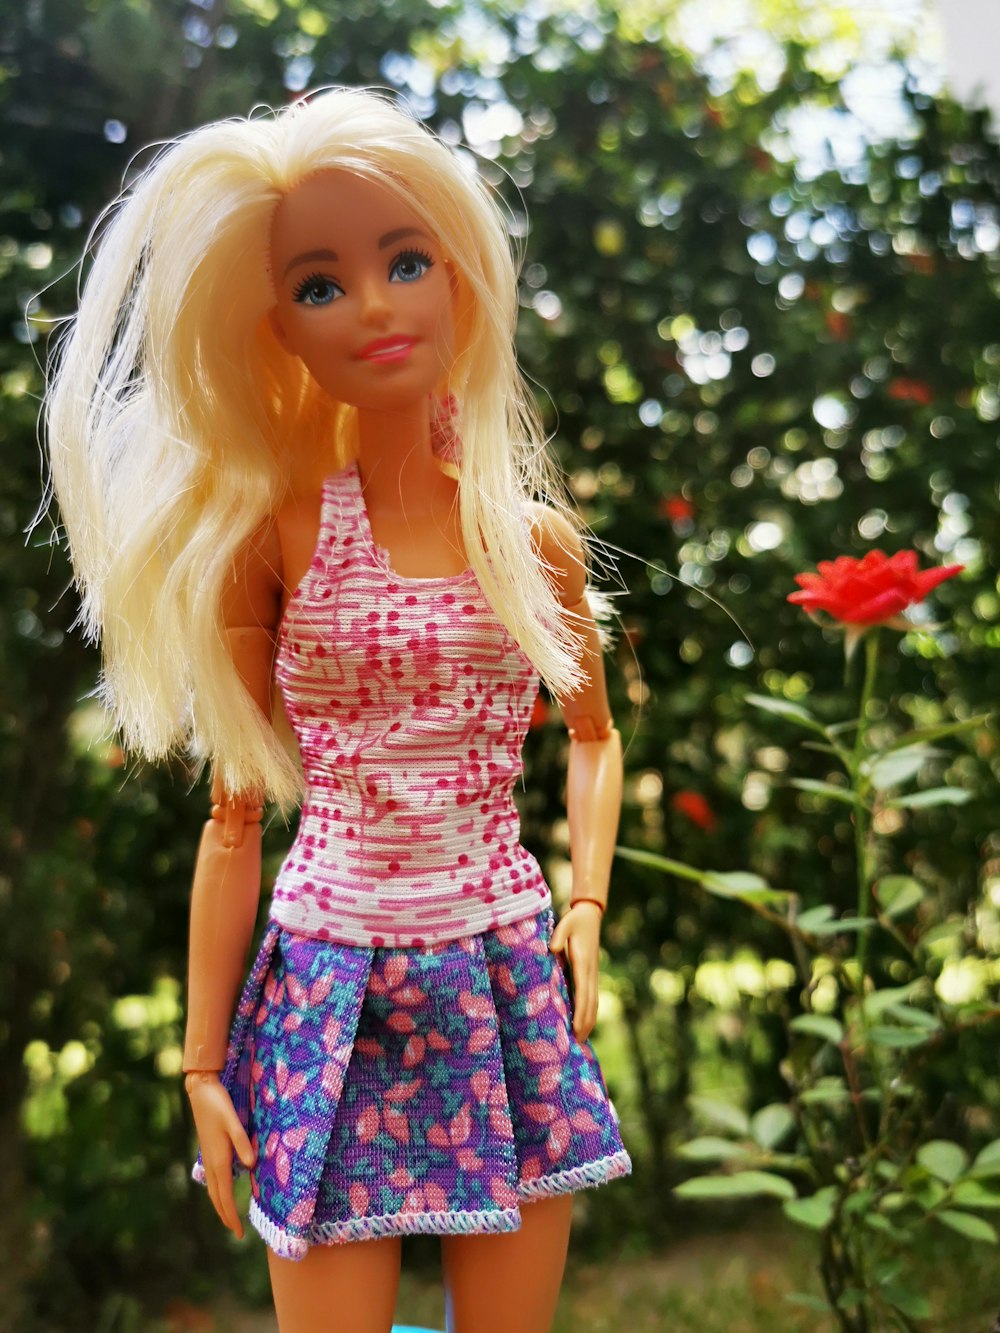 500+ Barbie Photos [HQ] | Download Free Images On Unsplash